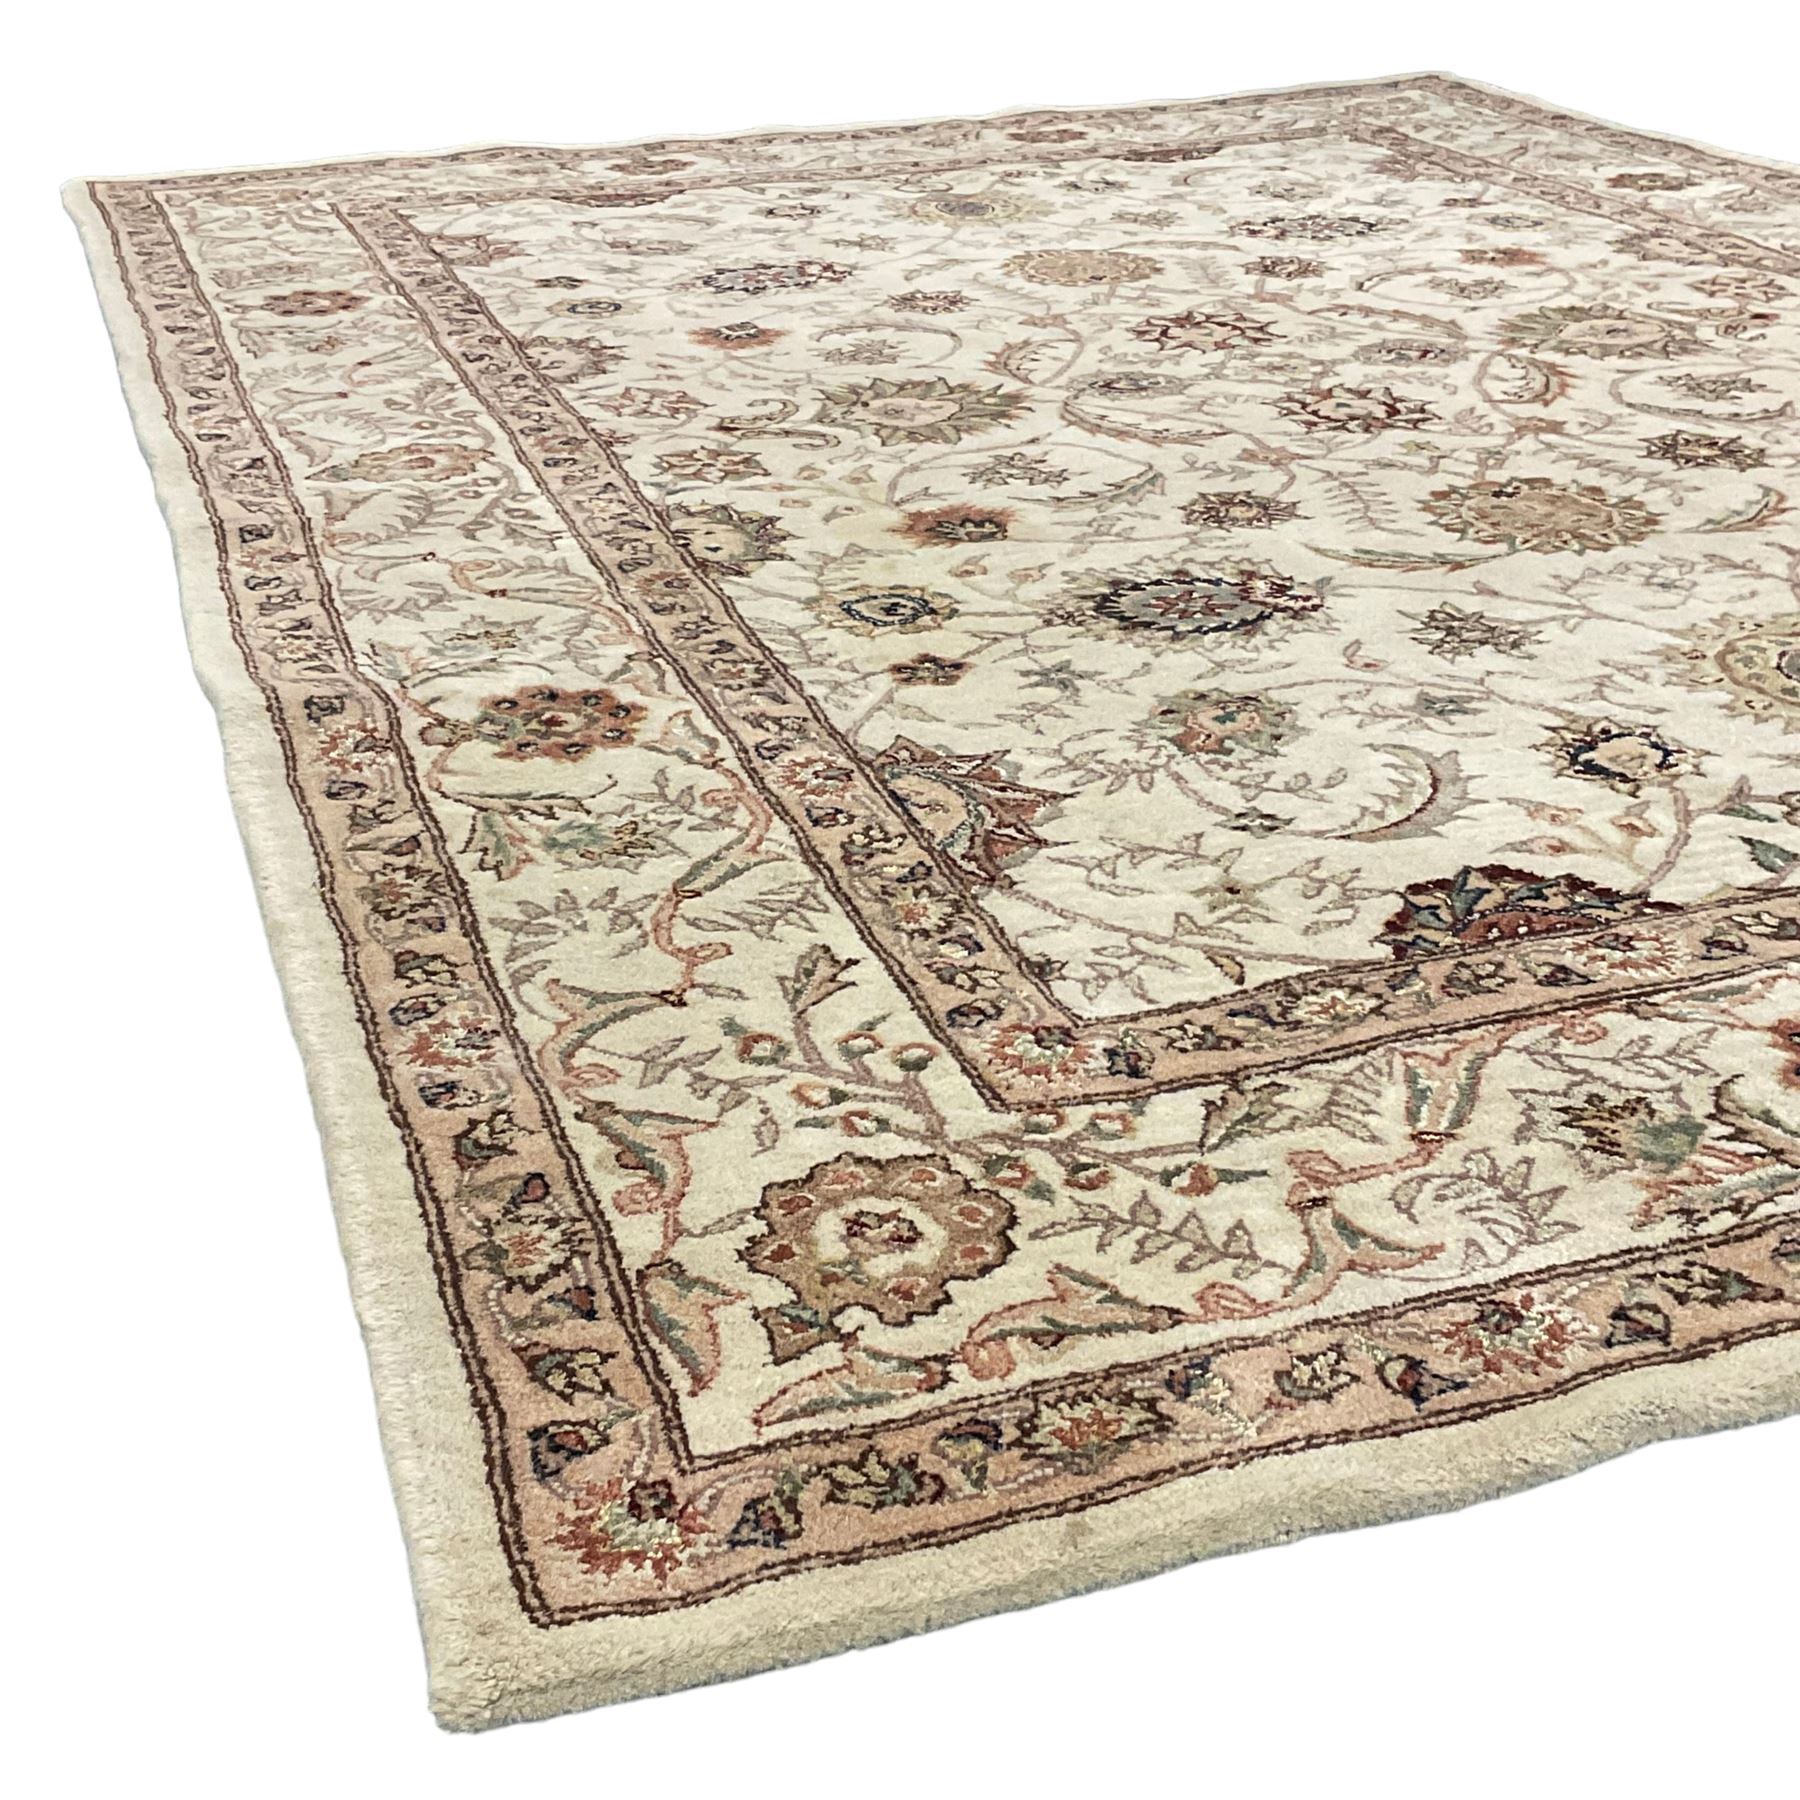 Gooch Carpets - Persian design ivory ground rug - Image 4 of 4